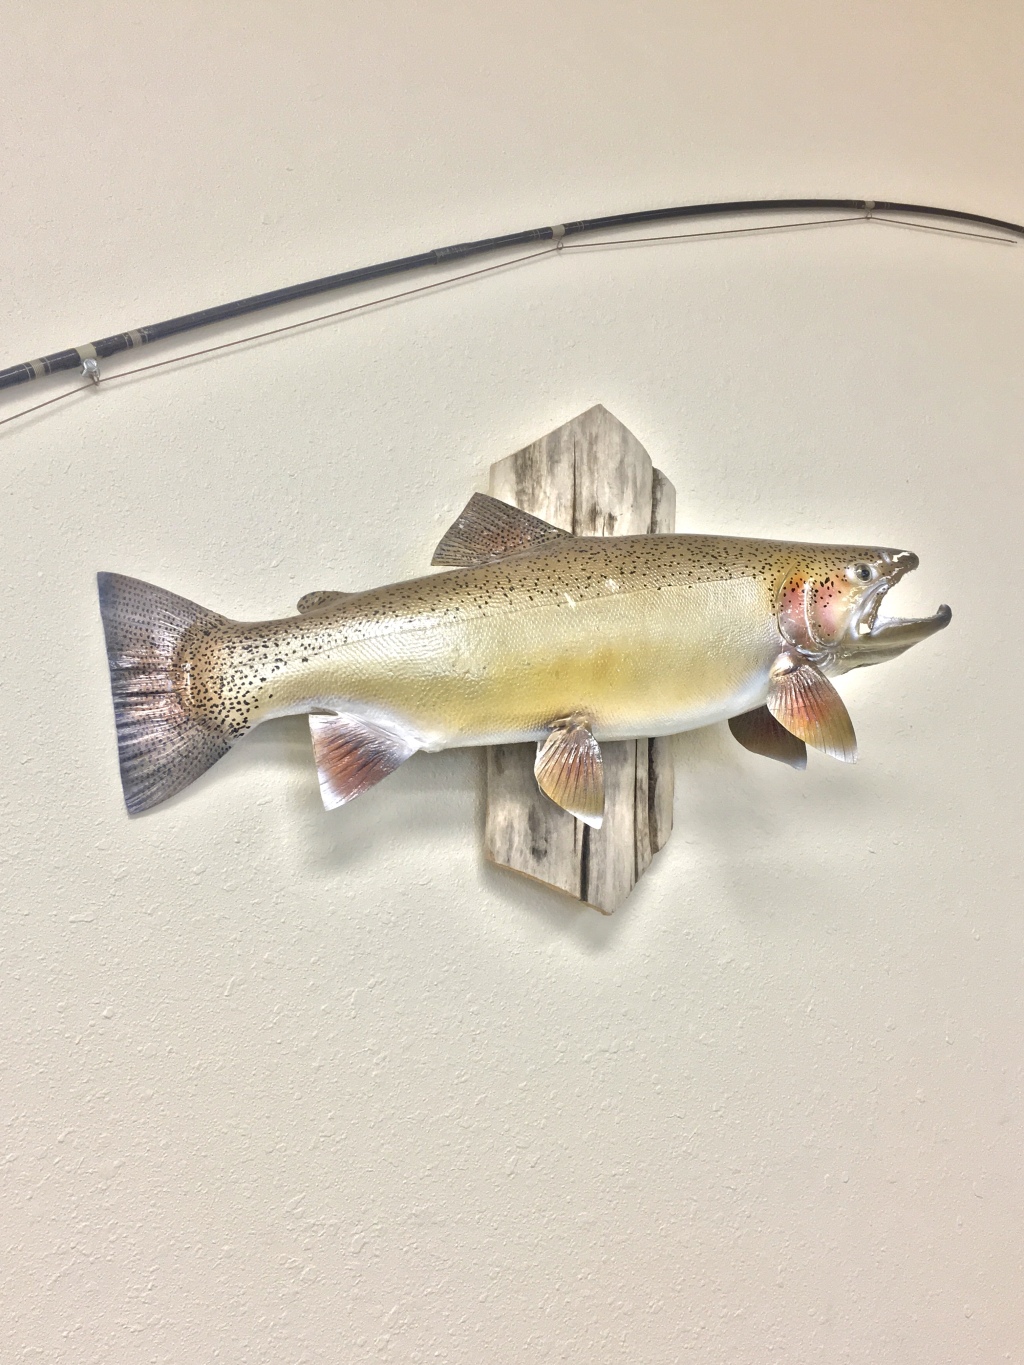 Mora National Fish Hatchery (Mora, NM)